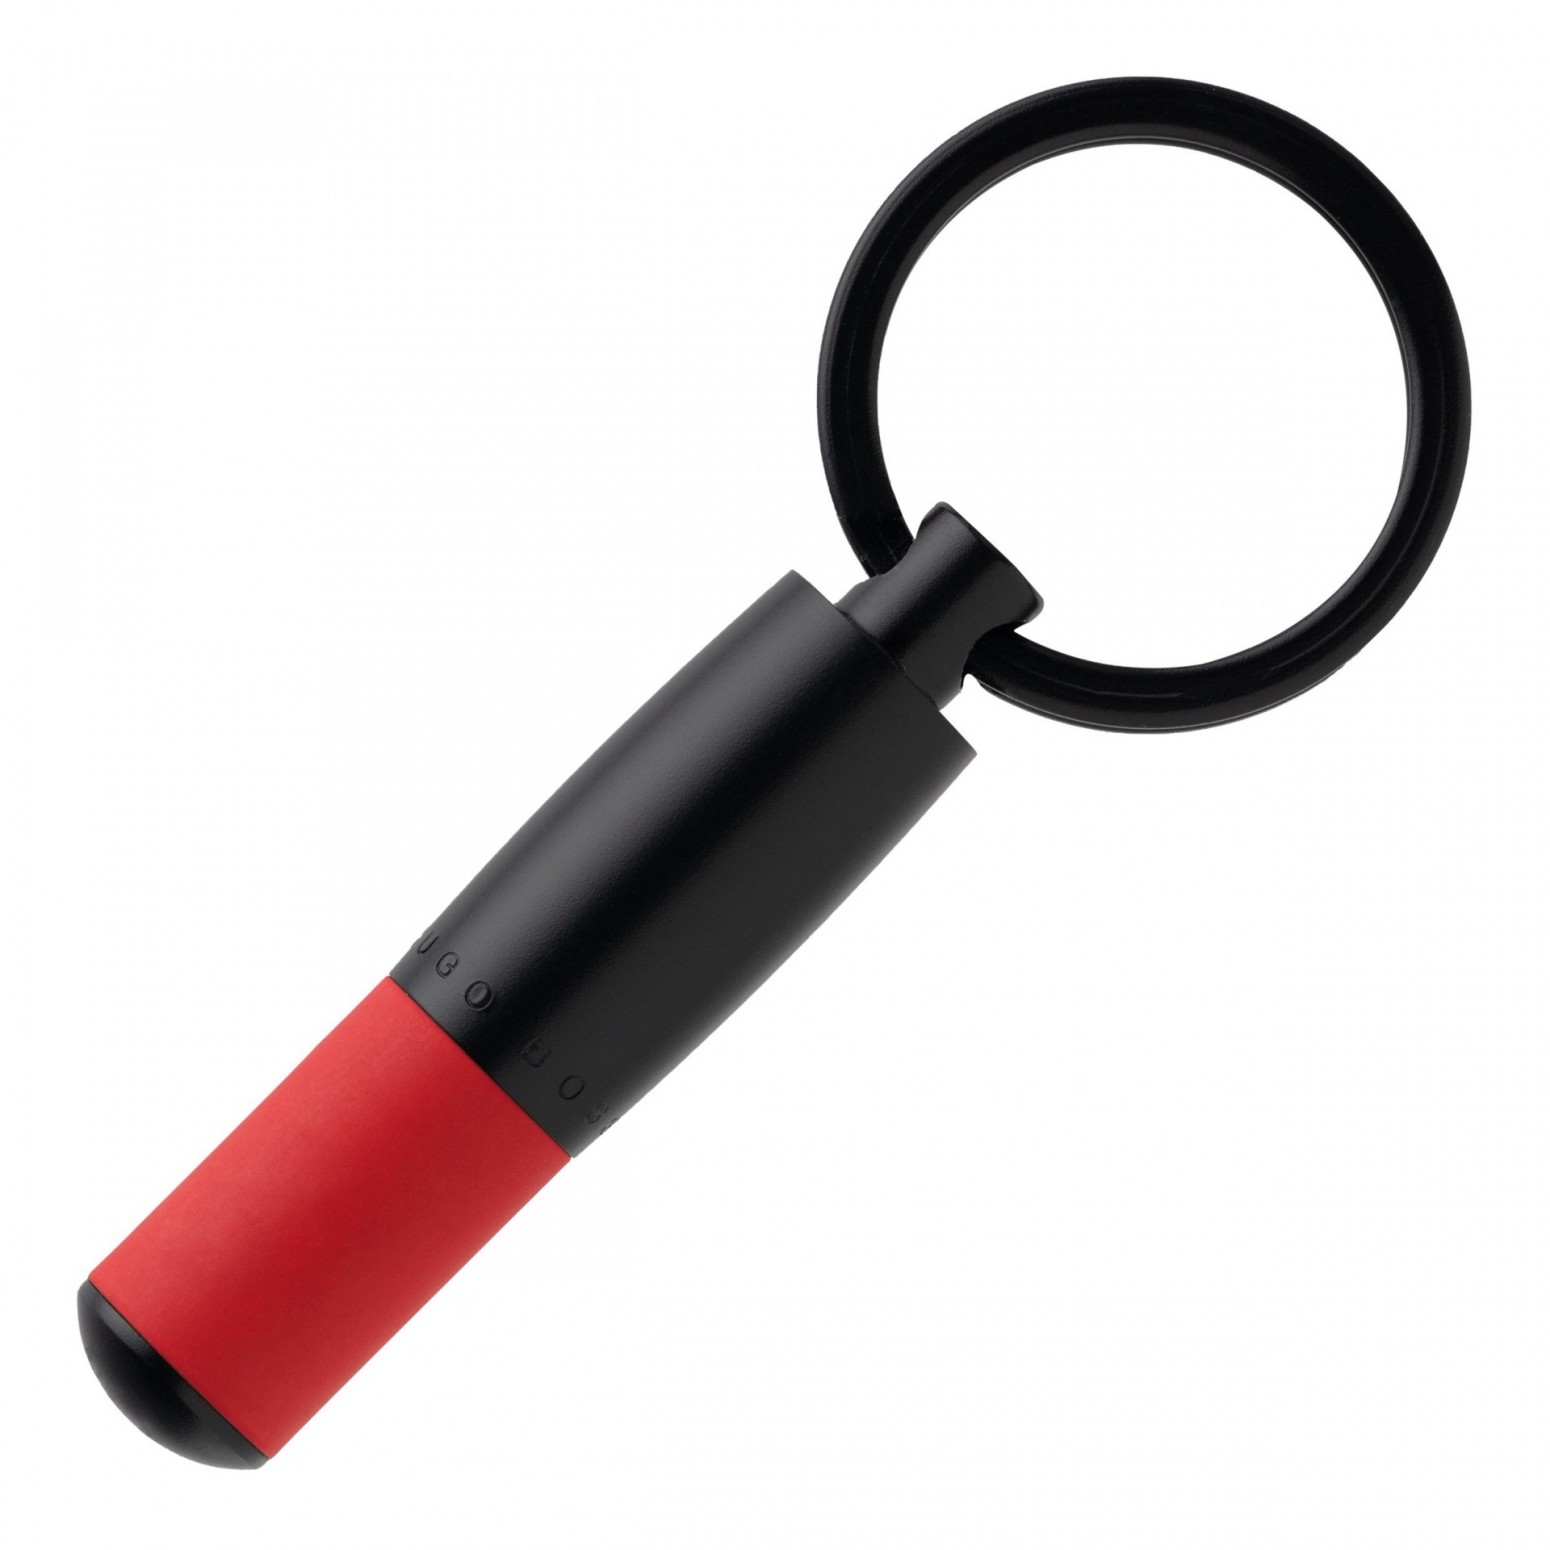 Hugo Boss key ring, Gear Matrix Red HAK007P, kl0084 GIFTS Κοσμηματα - chrilia.gr